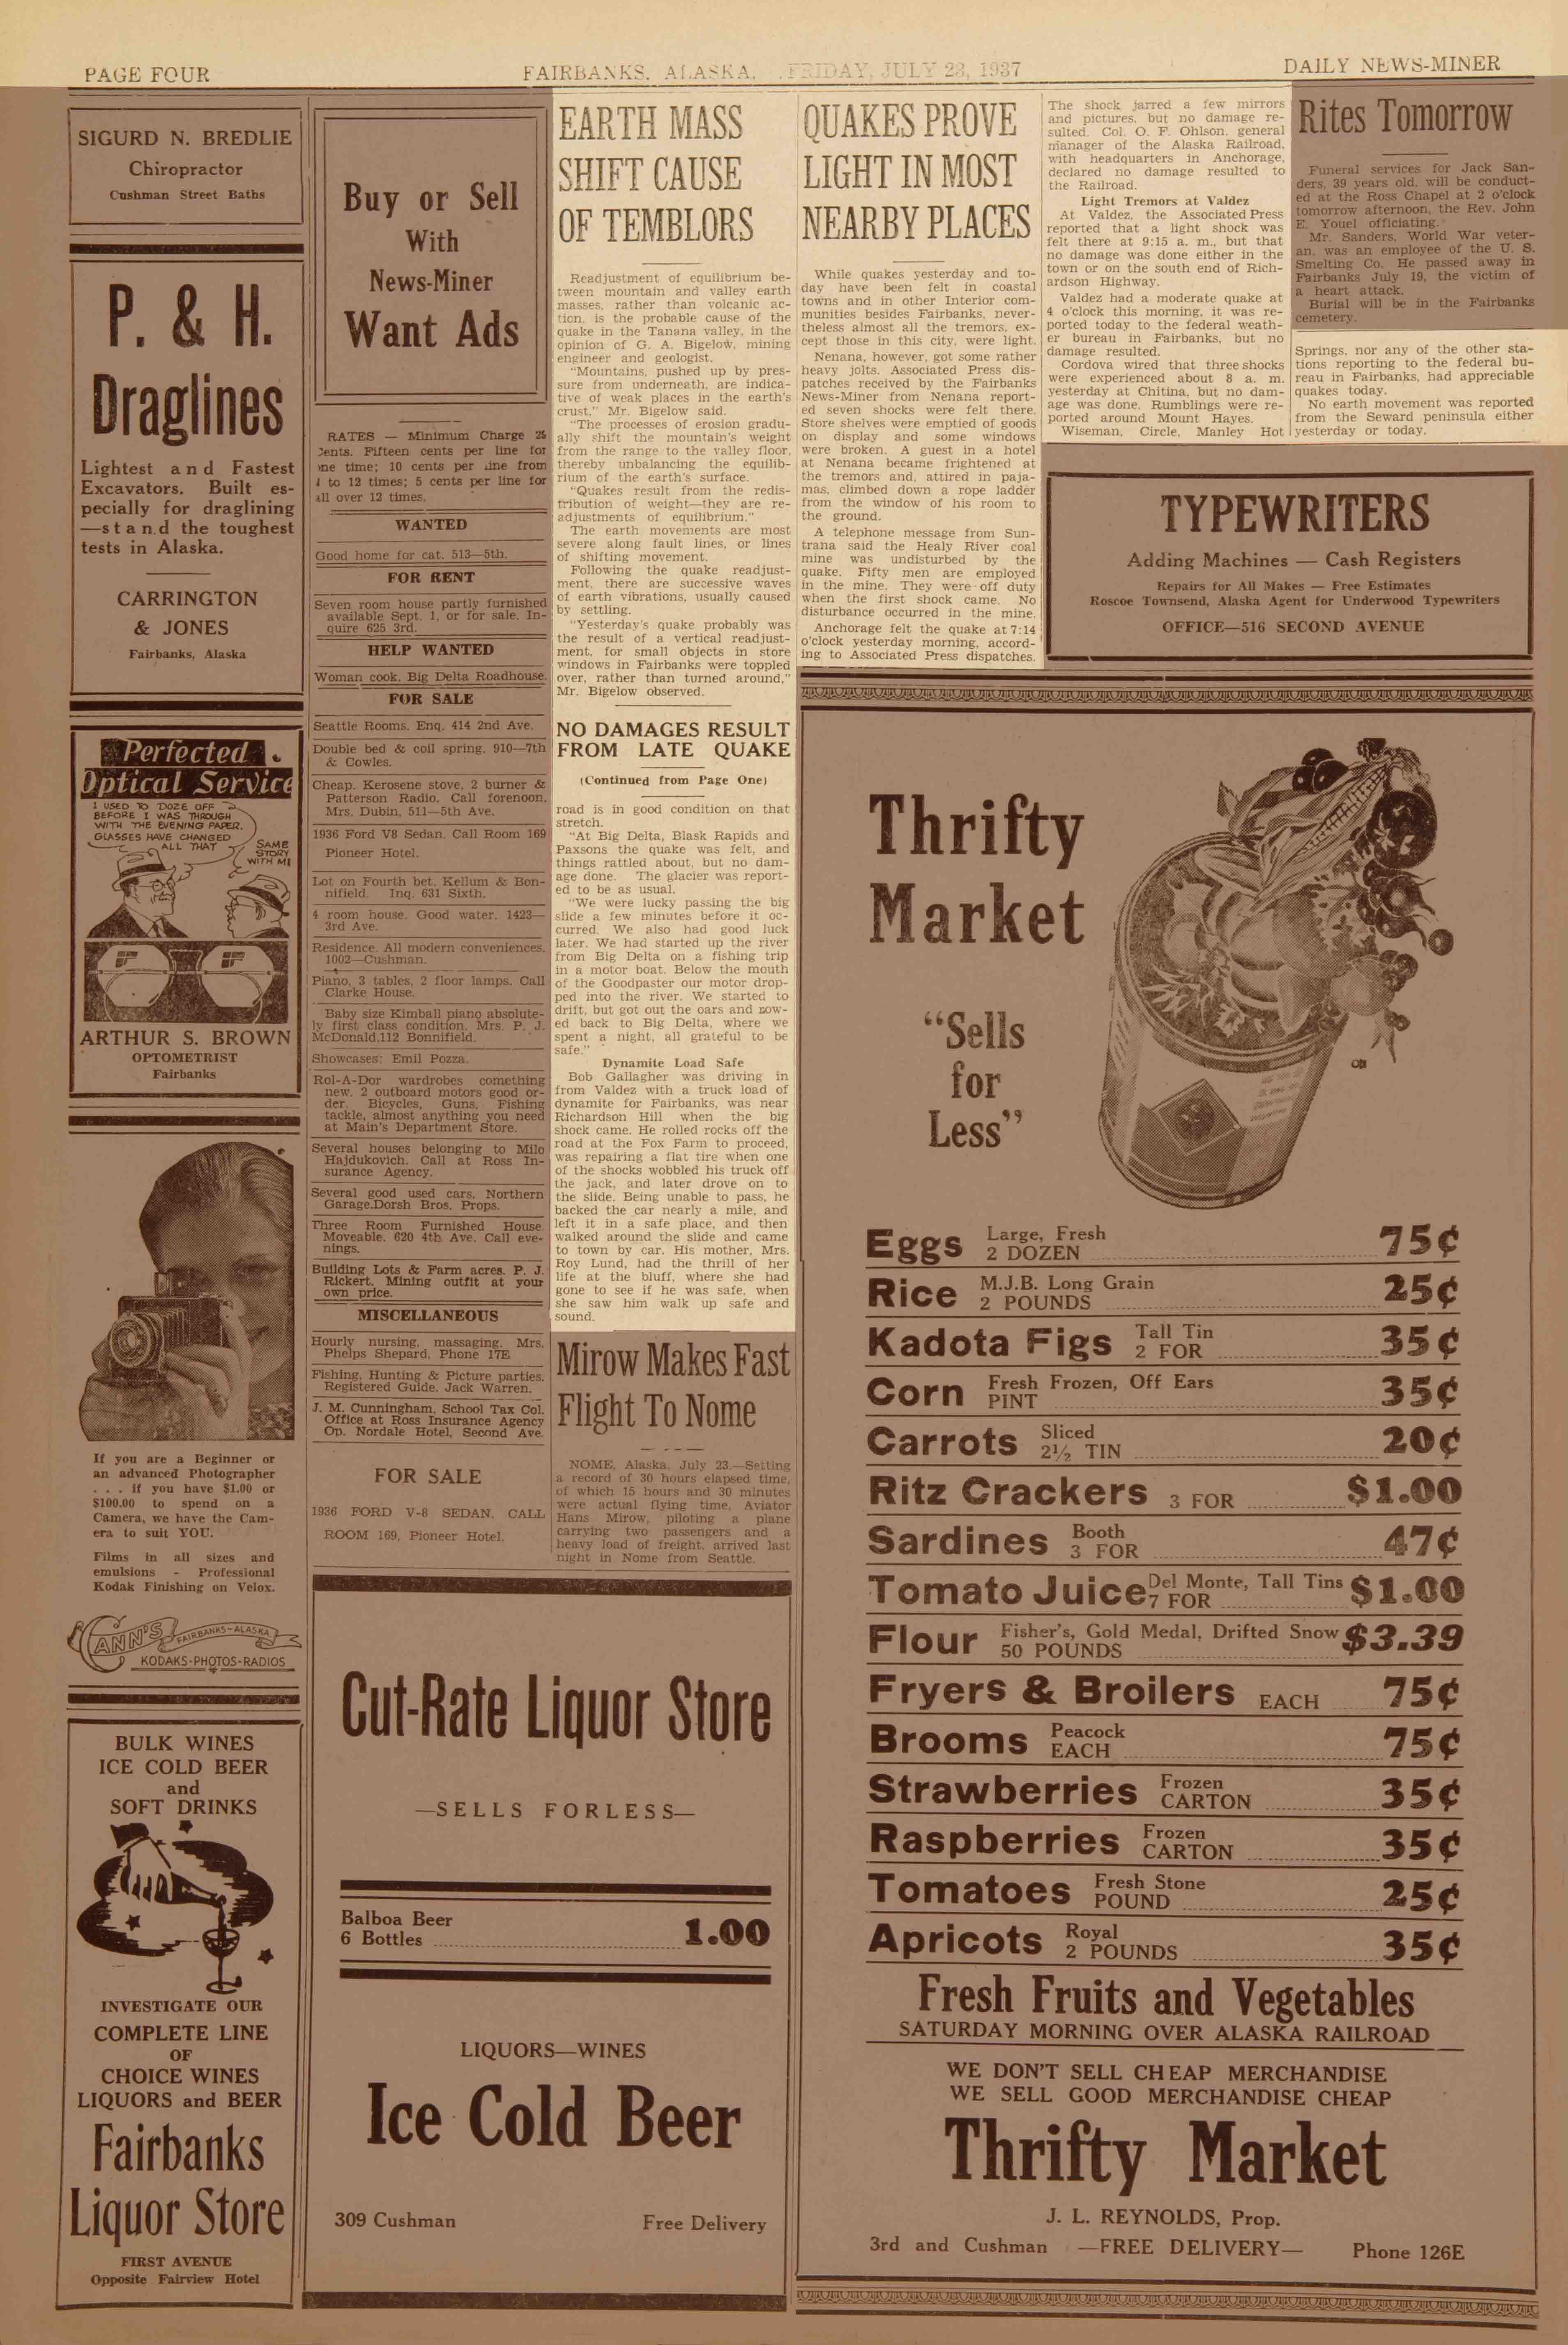 1937 July 23, Fairbanks Daily News-Miner (pg 4)